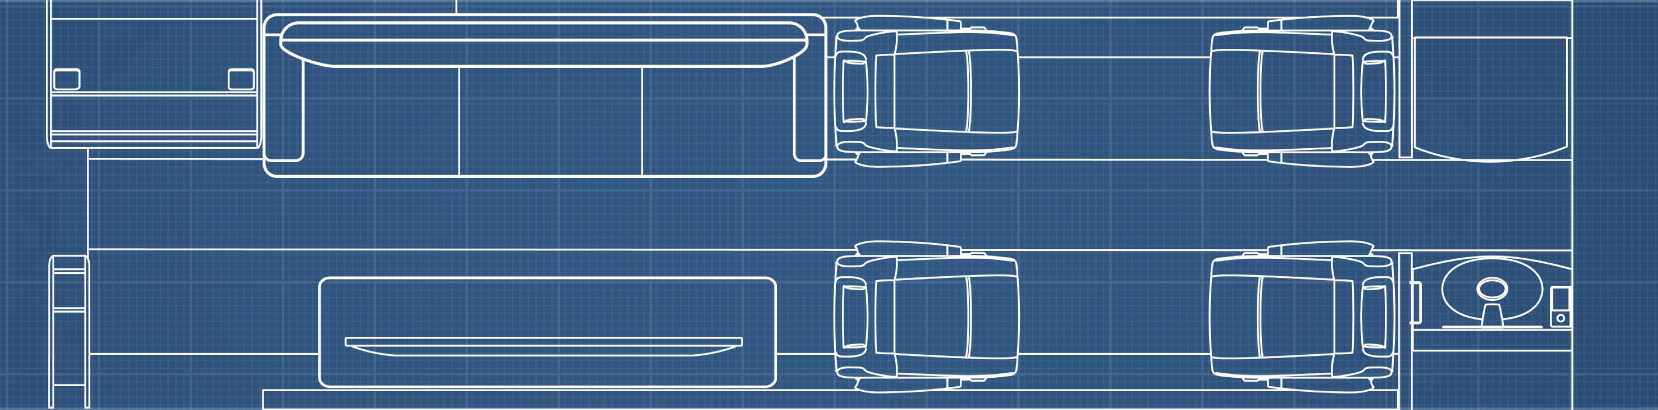 Honda Jet 2600 layout 2